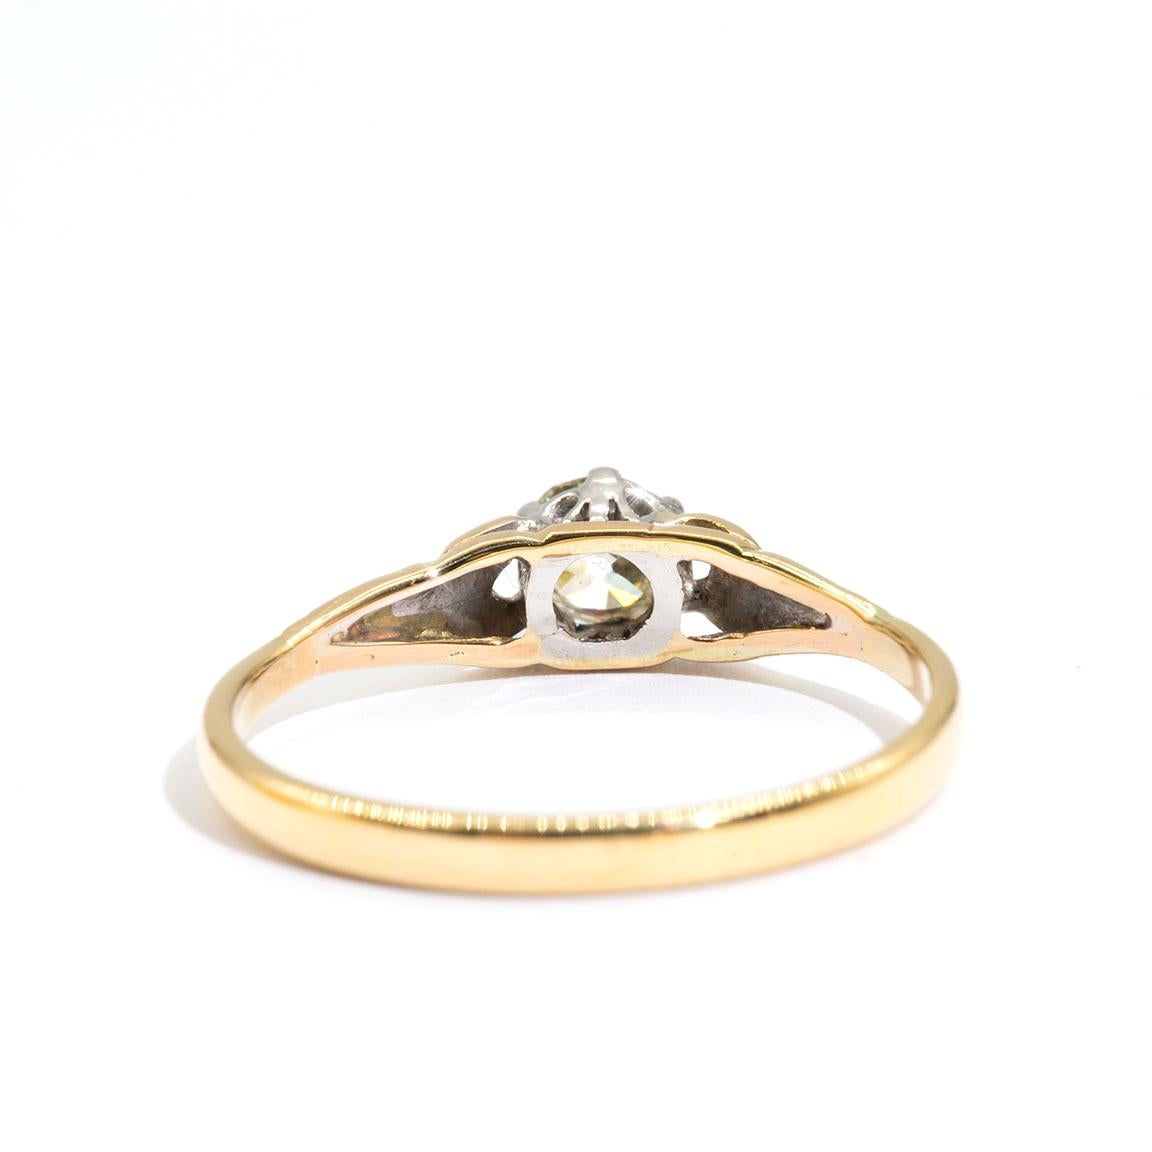 Modern 18 Carat Gold Old European Cut Diamond Vintage Solitaire Engagement Ring